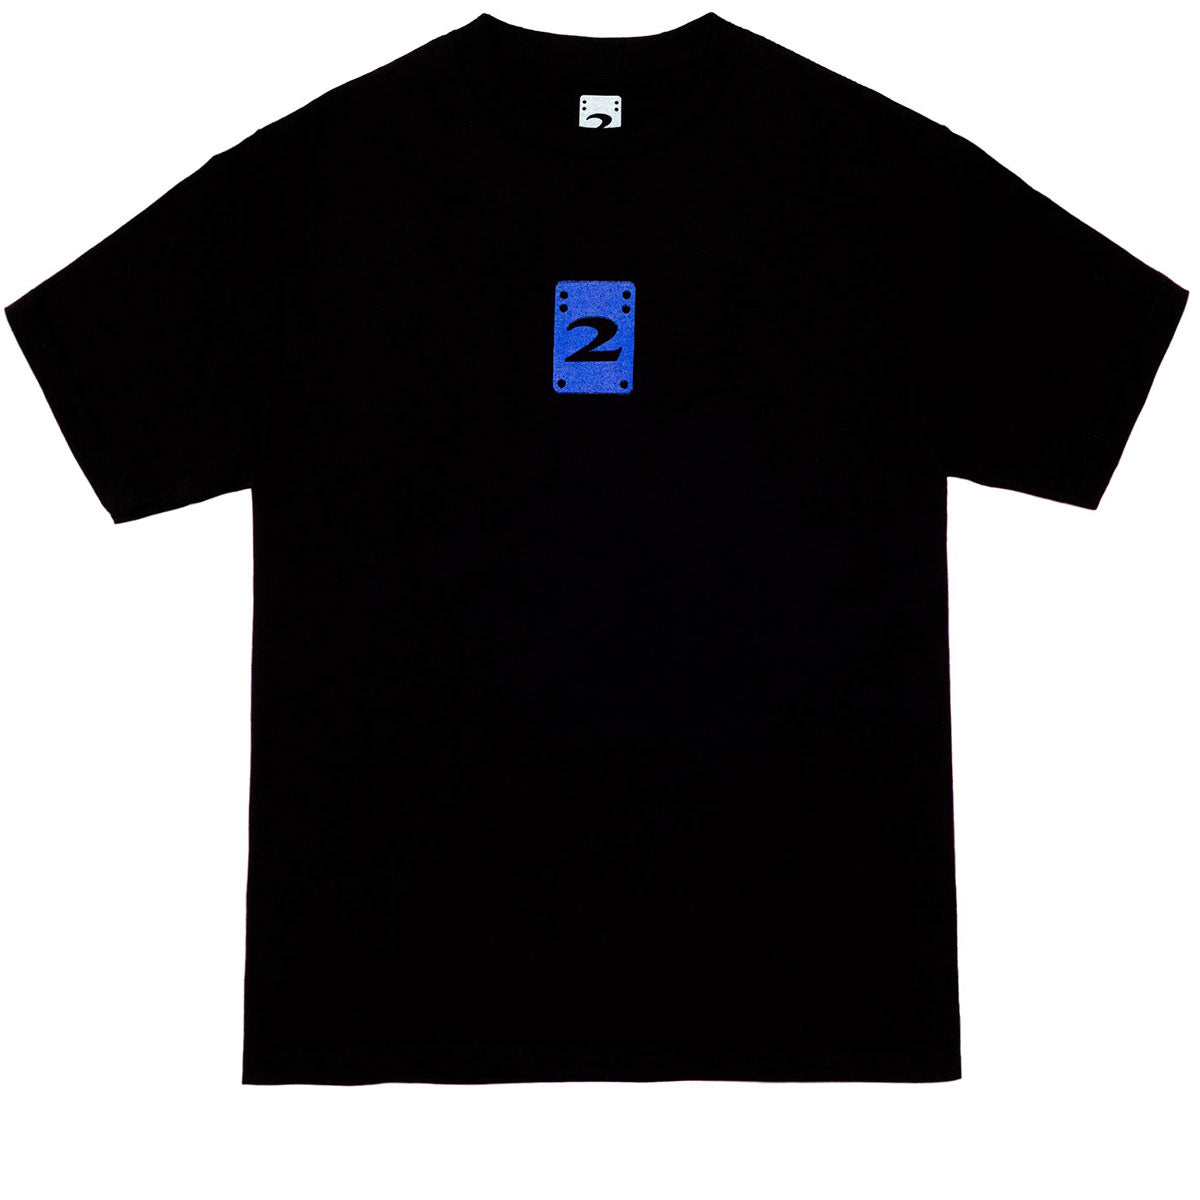 2 Riser Pads Logo T-Shirt - Black image 1